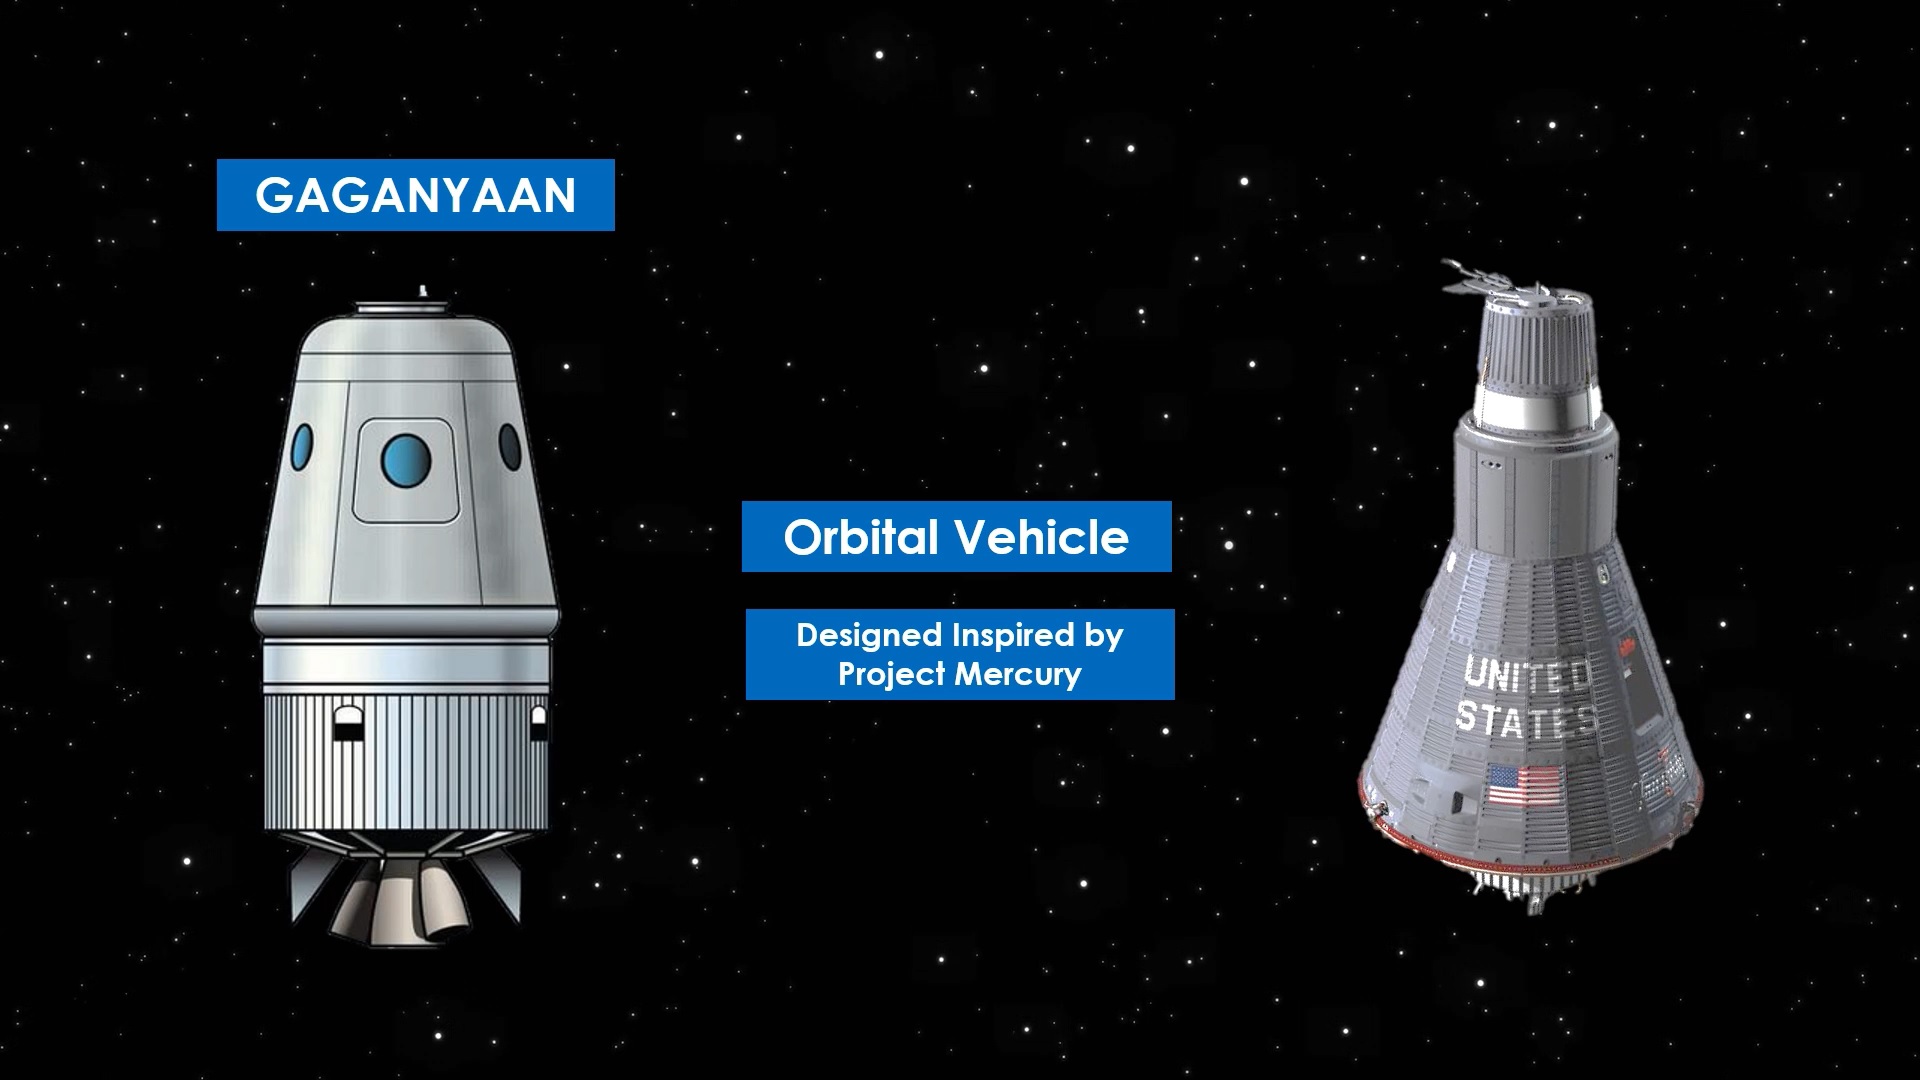 The Orbital Vehicle 